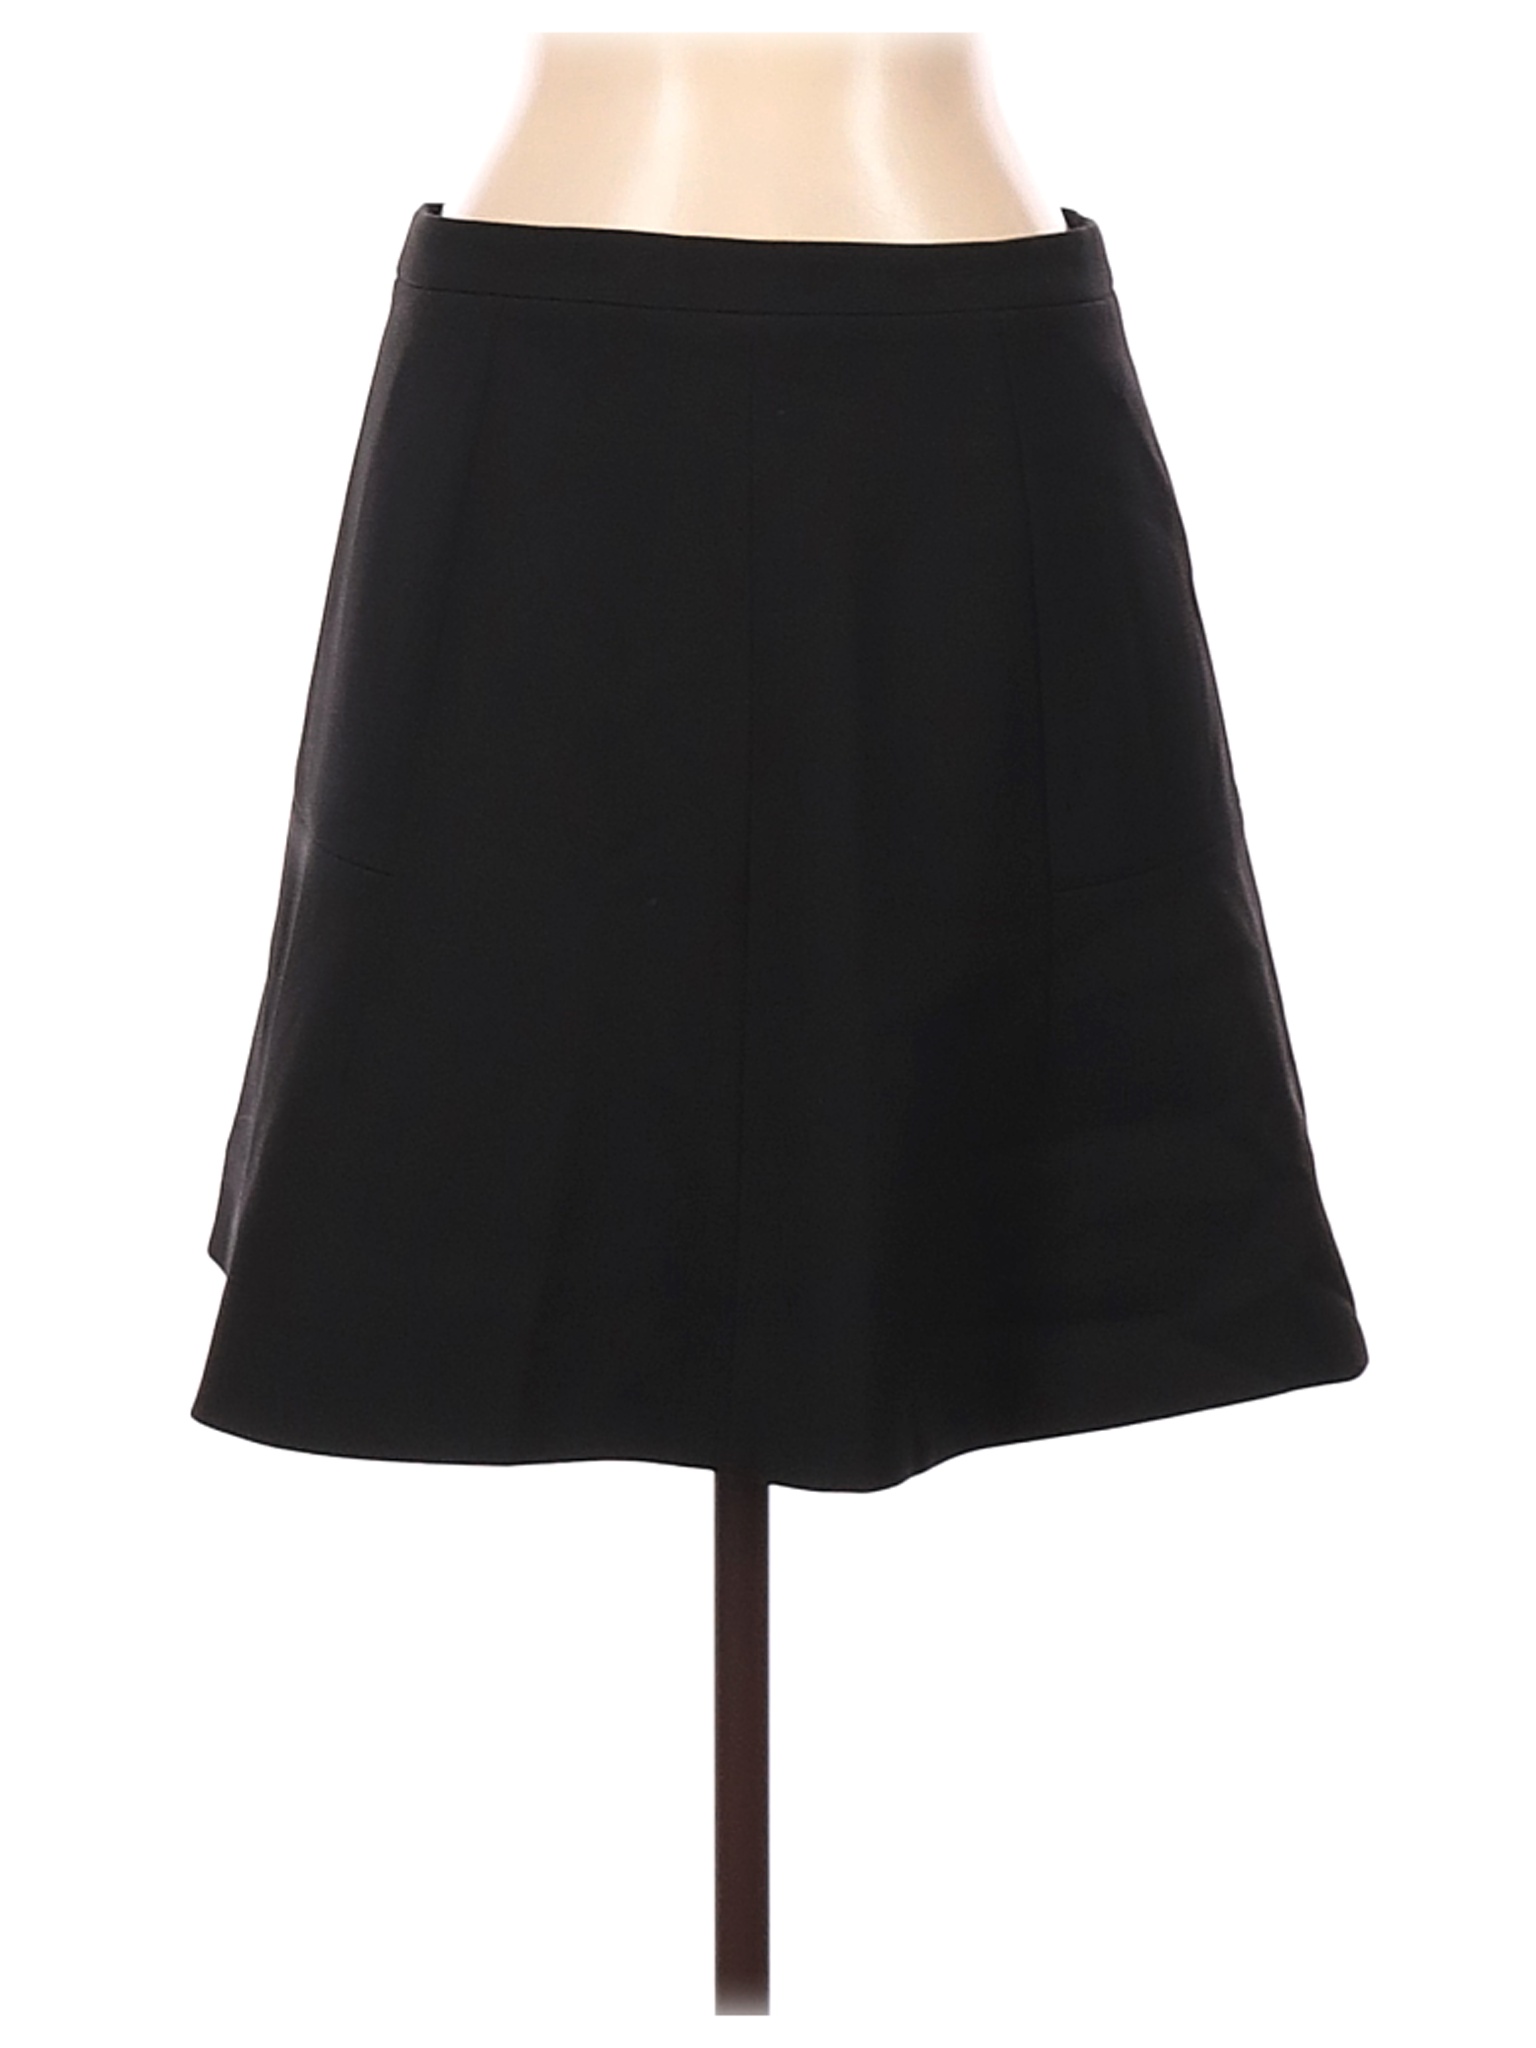 J.Crew Women Black Casual Skirt 2 | eBay